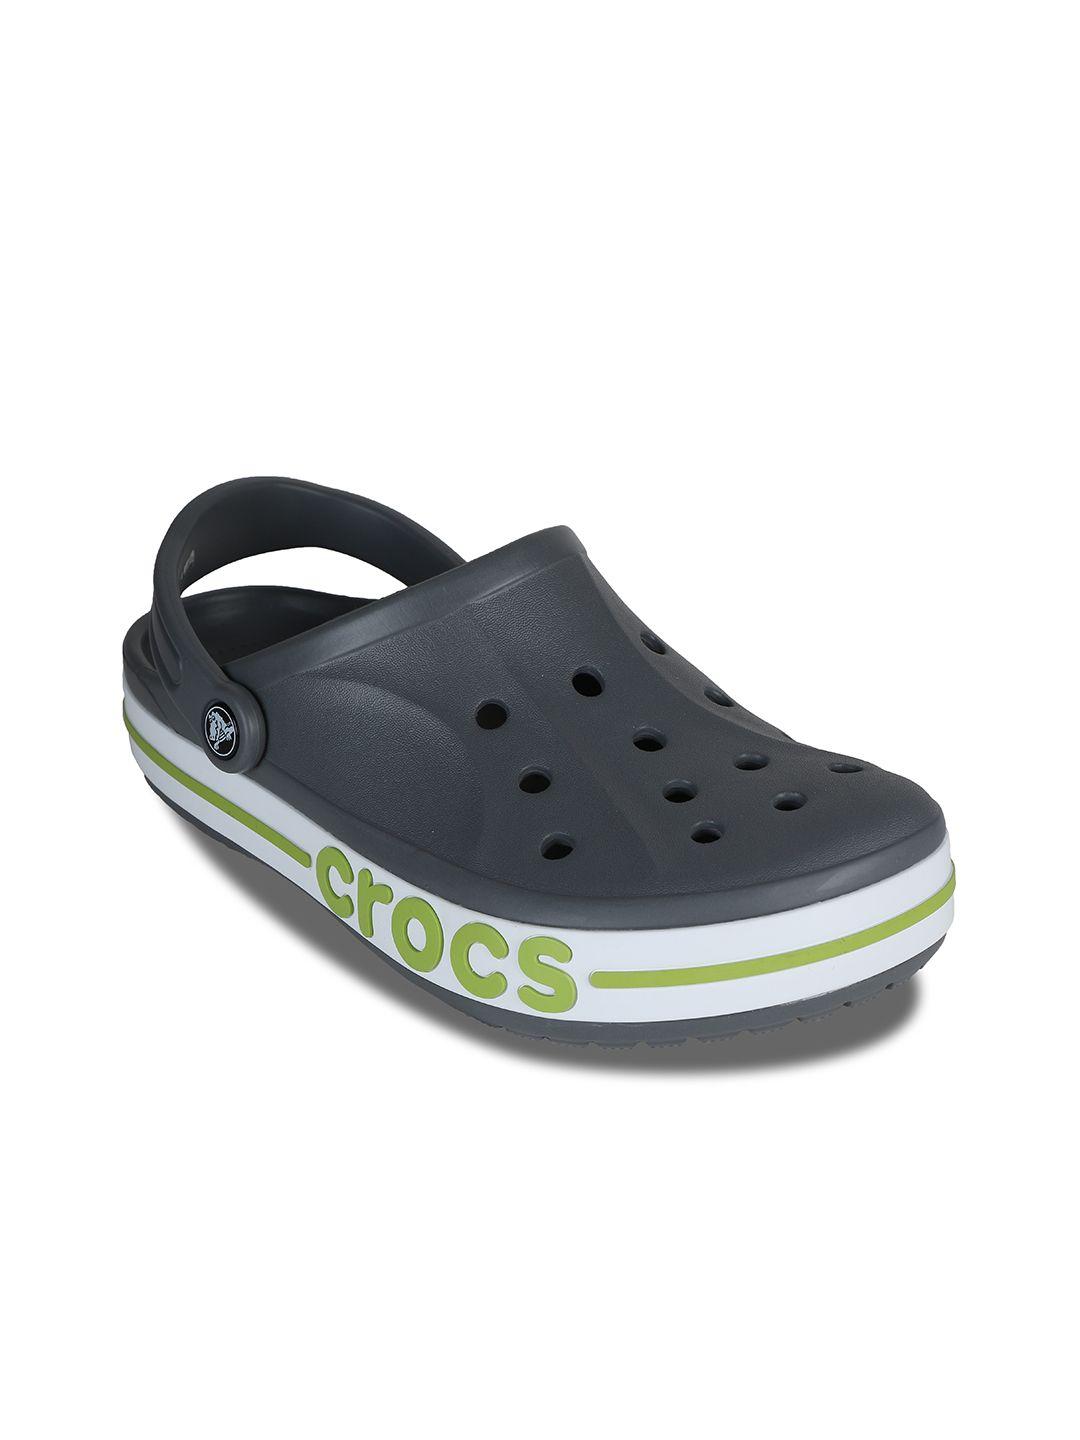 crocs women grey & white solid clogs